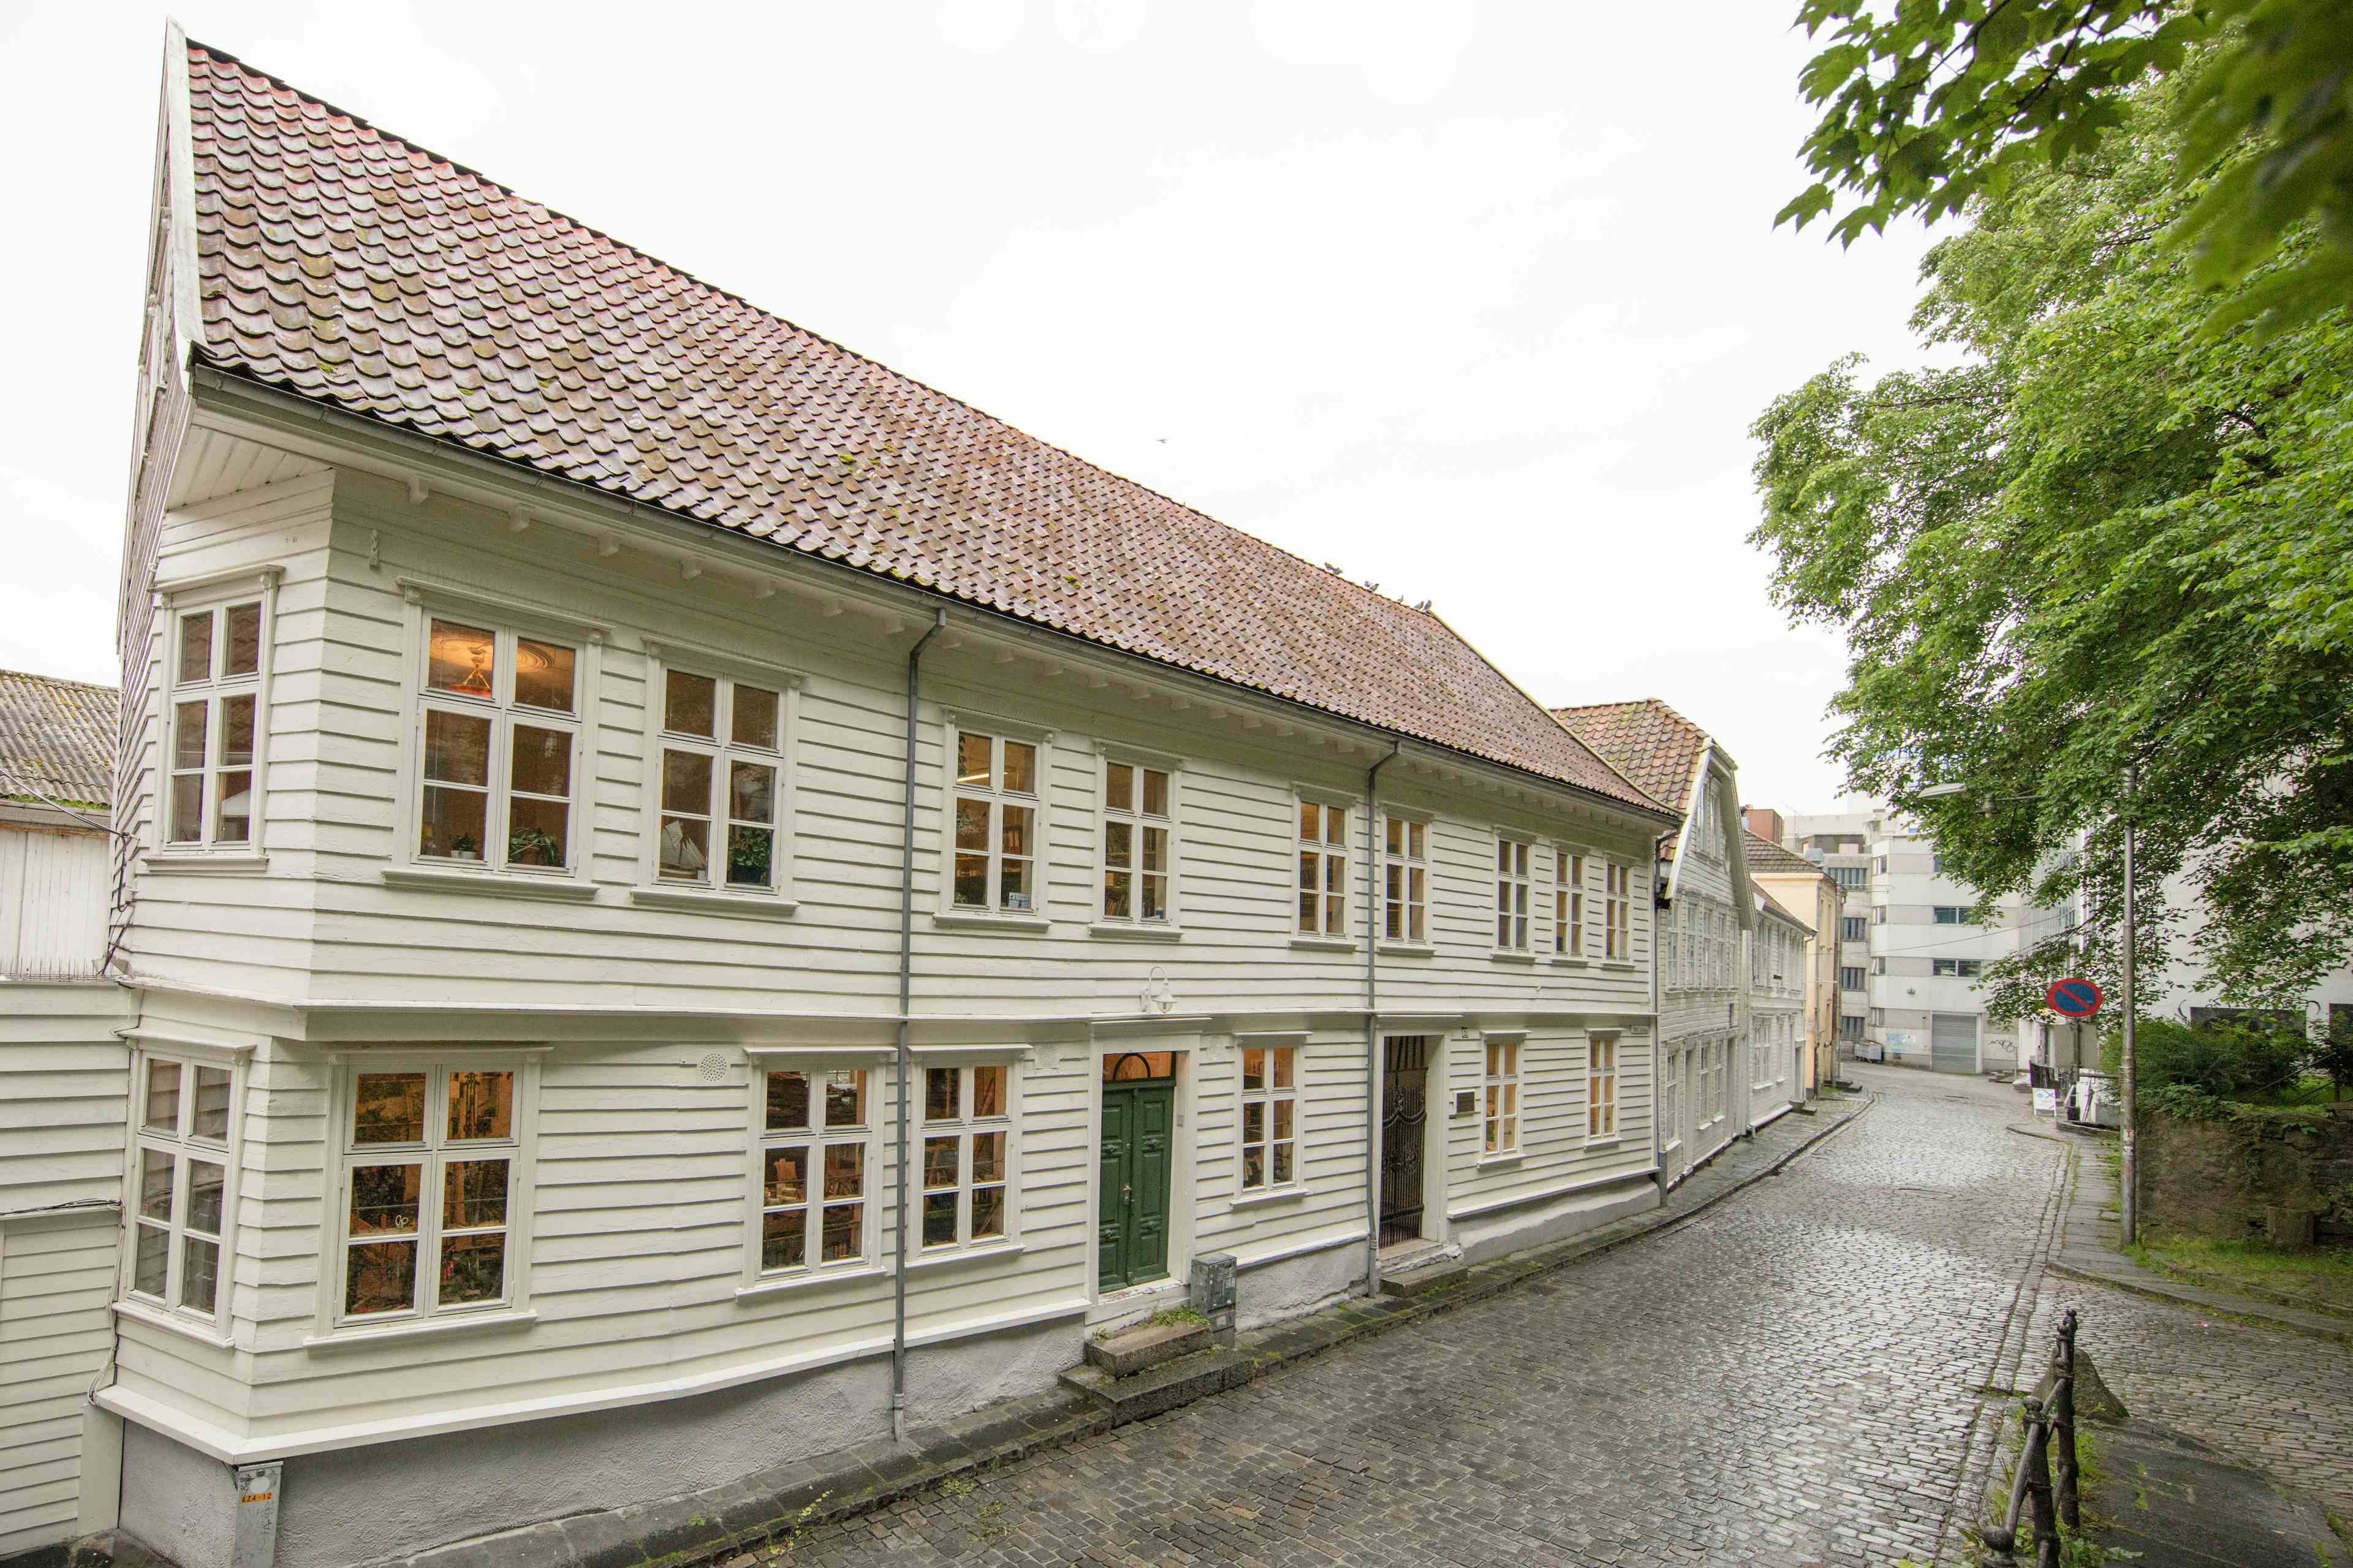 Fasade Stavanger Maritime Museum